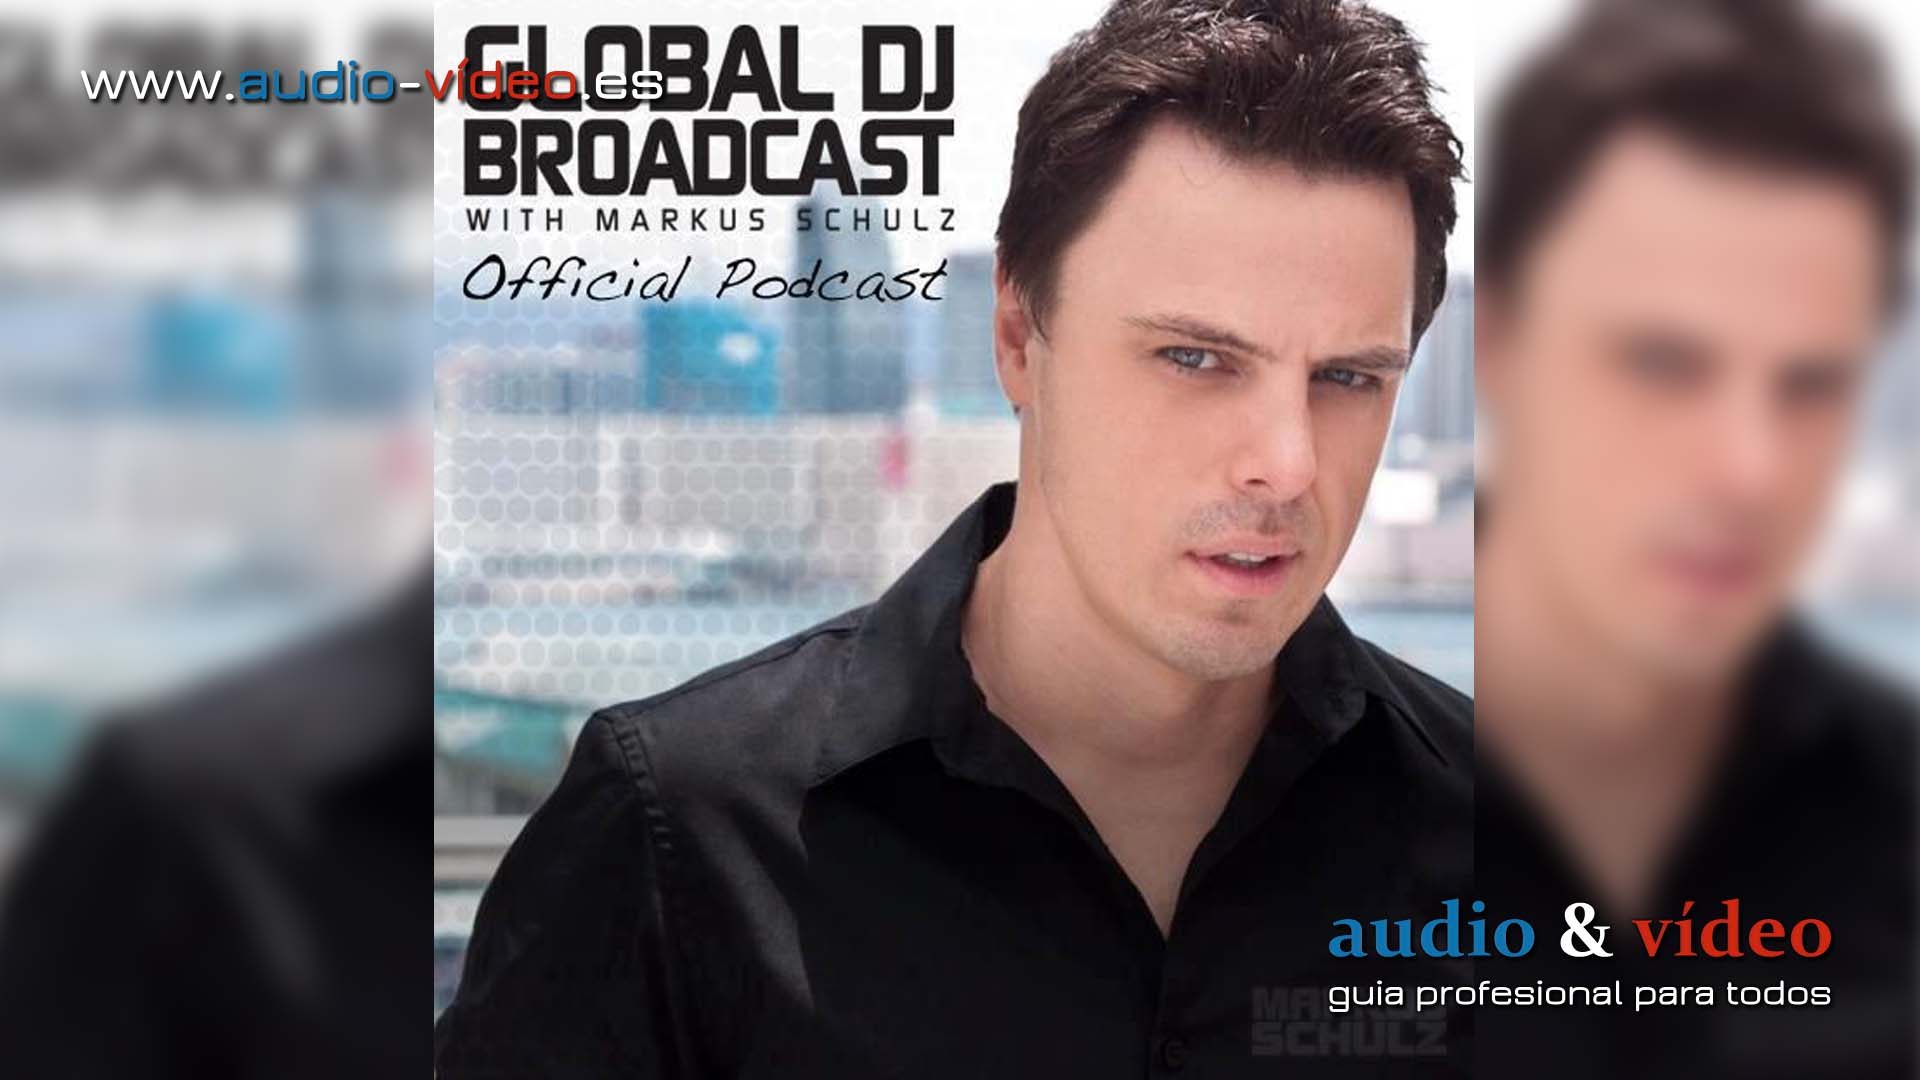 Global DJ Broadcast Aug 28 2014 – Ibiza Summer Sessions